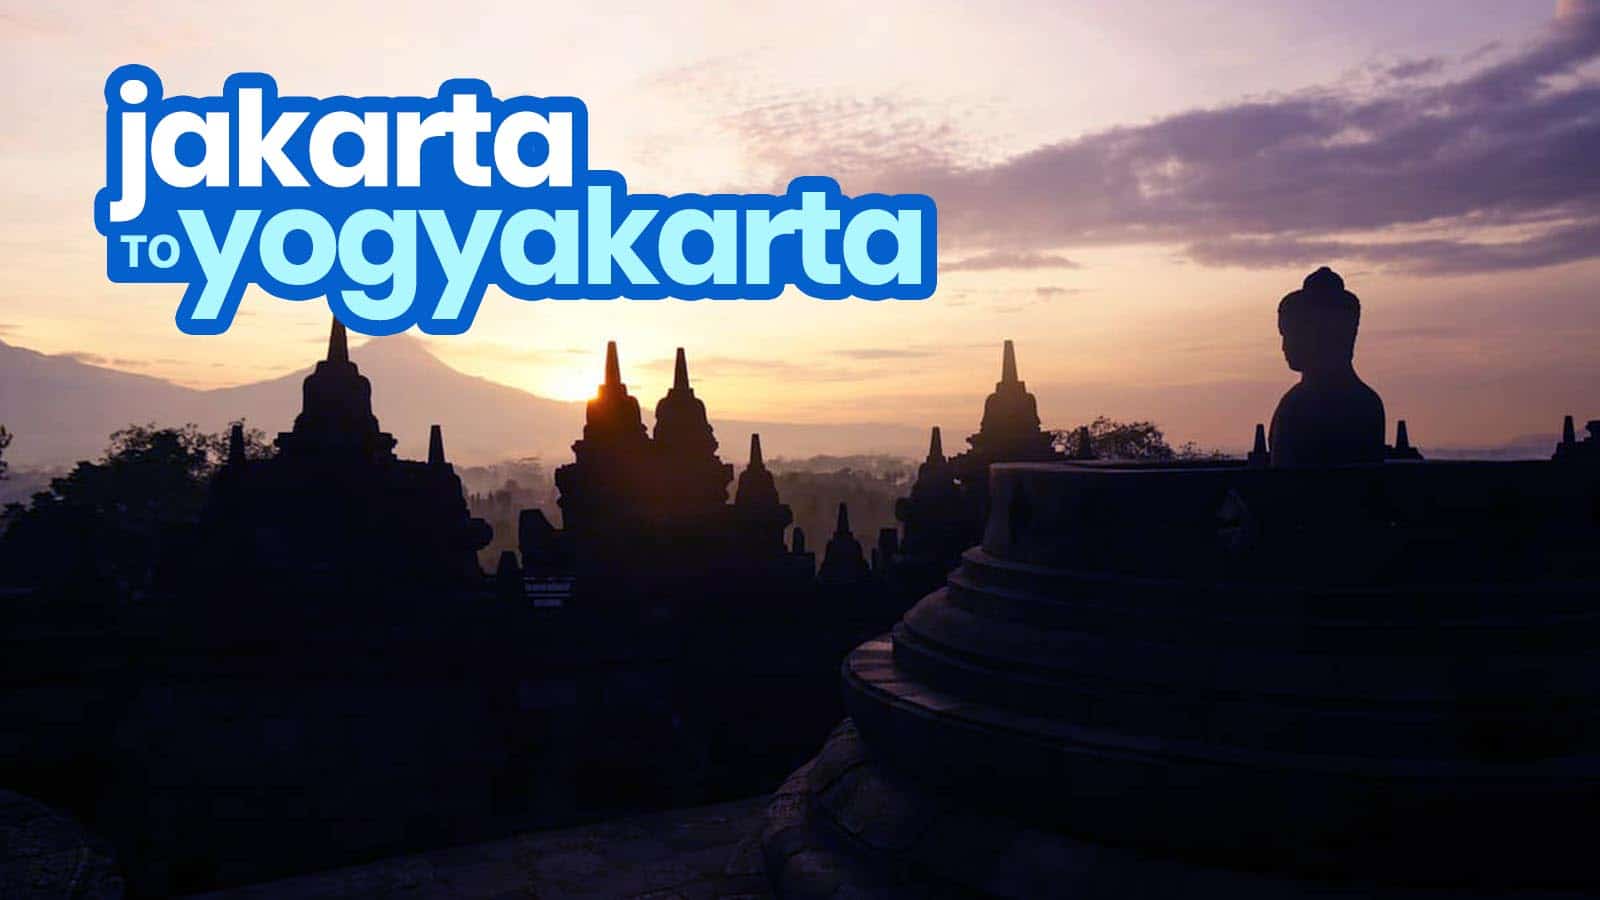 JAKARTA TO YOGYAKARTA: By Train, Bus & Plane